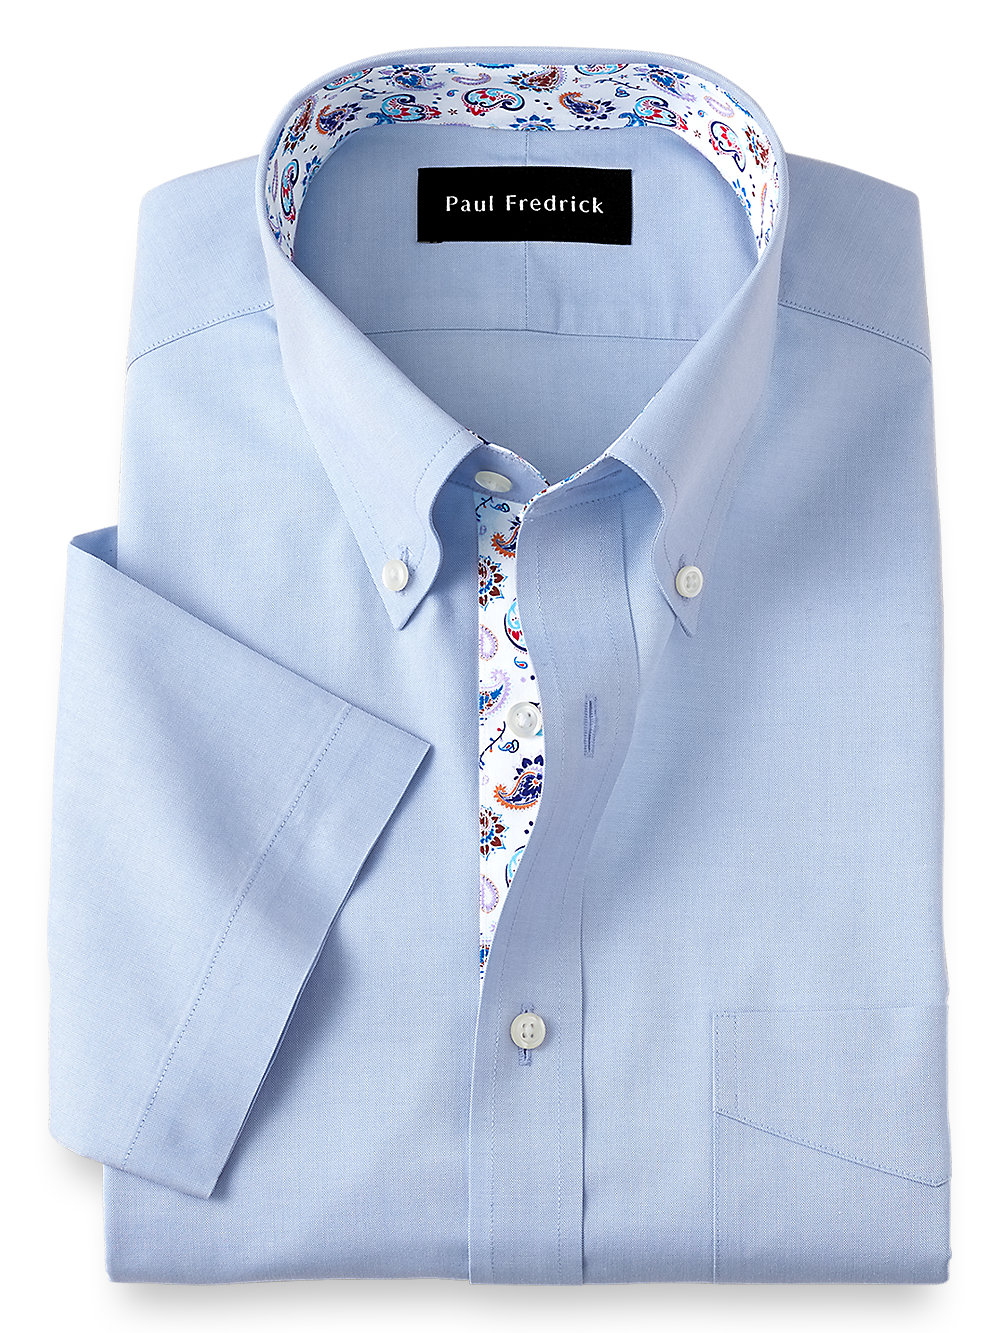 Paul Fredrick Mens Classic Fit Non-Iron Cotton Textured Solid Dress Shirt 